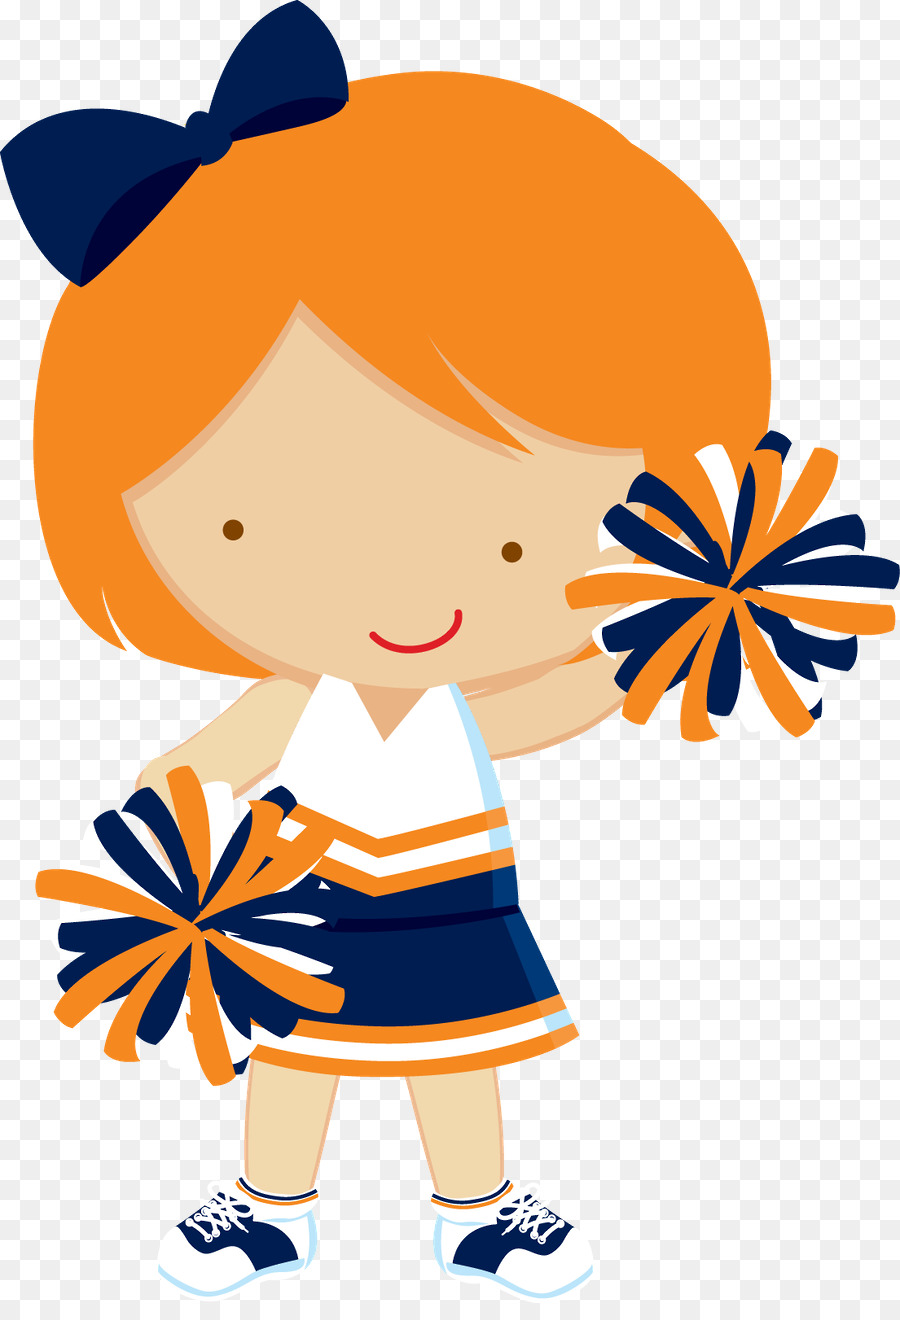 Cheerleading Pom-pom cheerleader Clip art - graduation figures png download - 900*1303 - Free Transparent Cheerleading png Download.